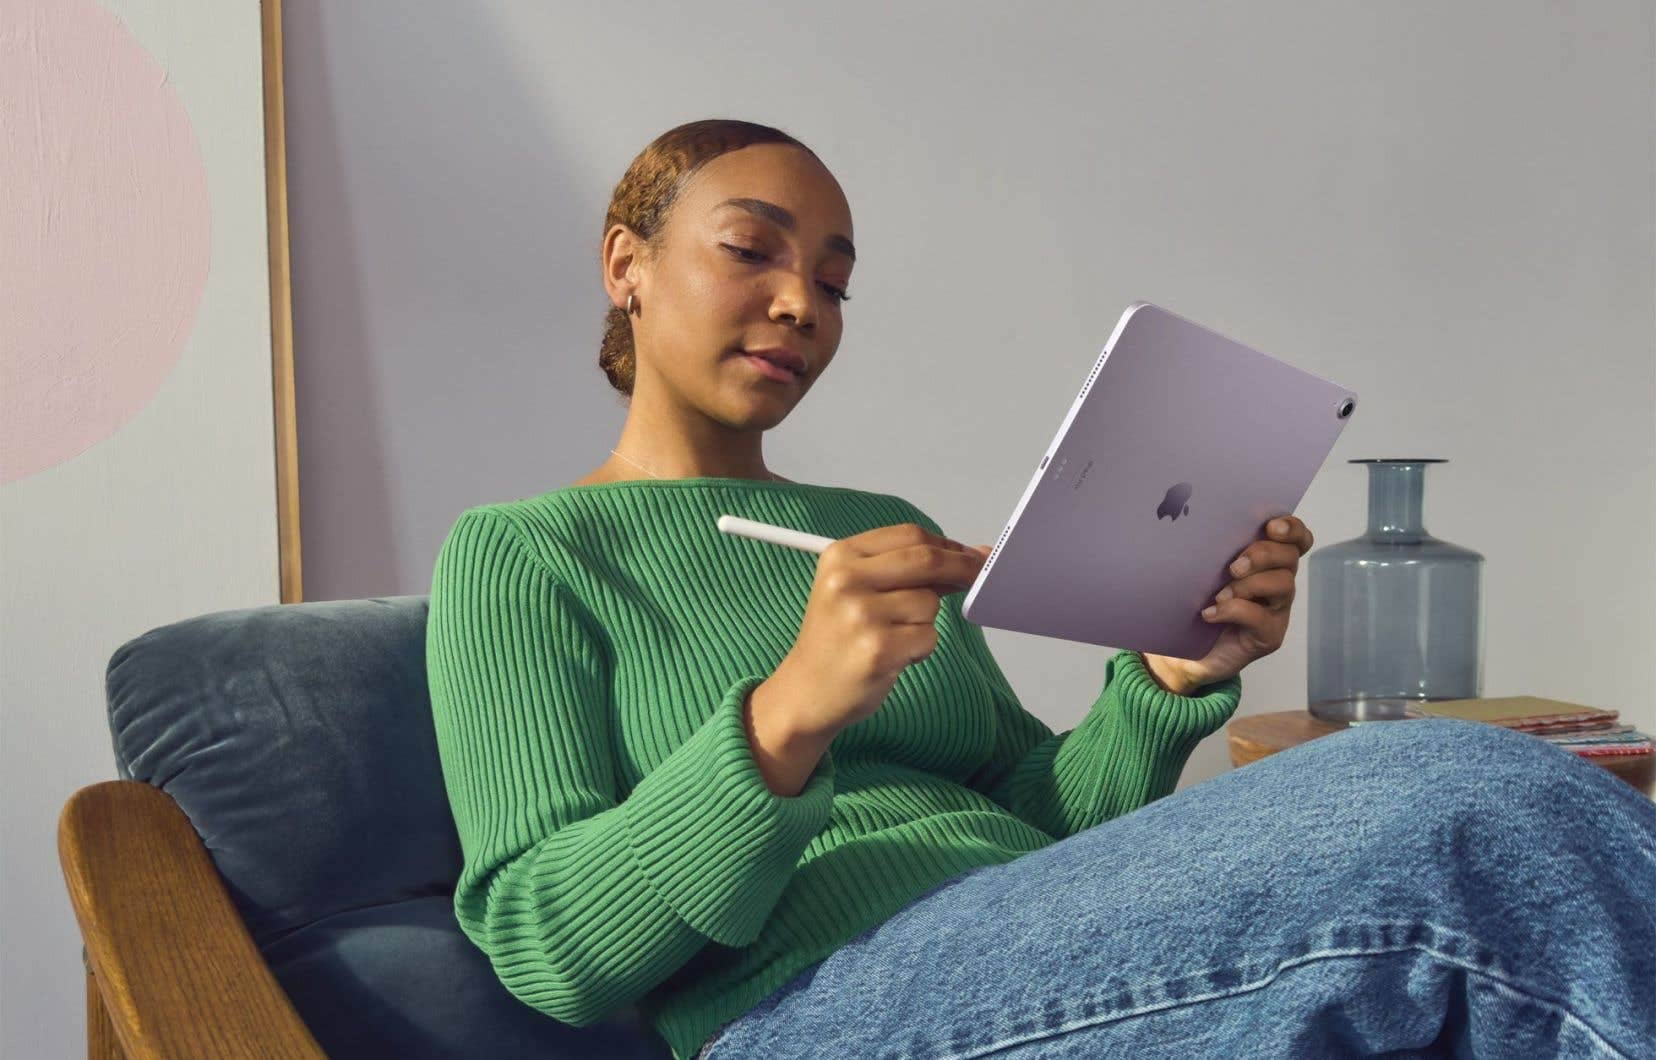 Avec quatre iPad, Apple met la table pour l’IA